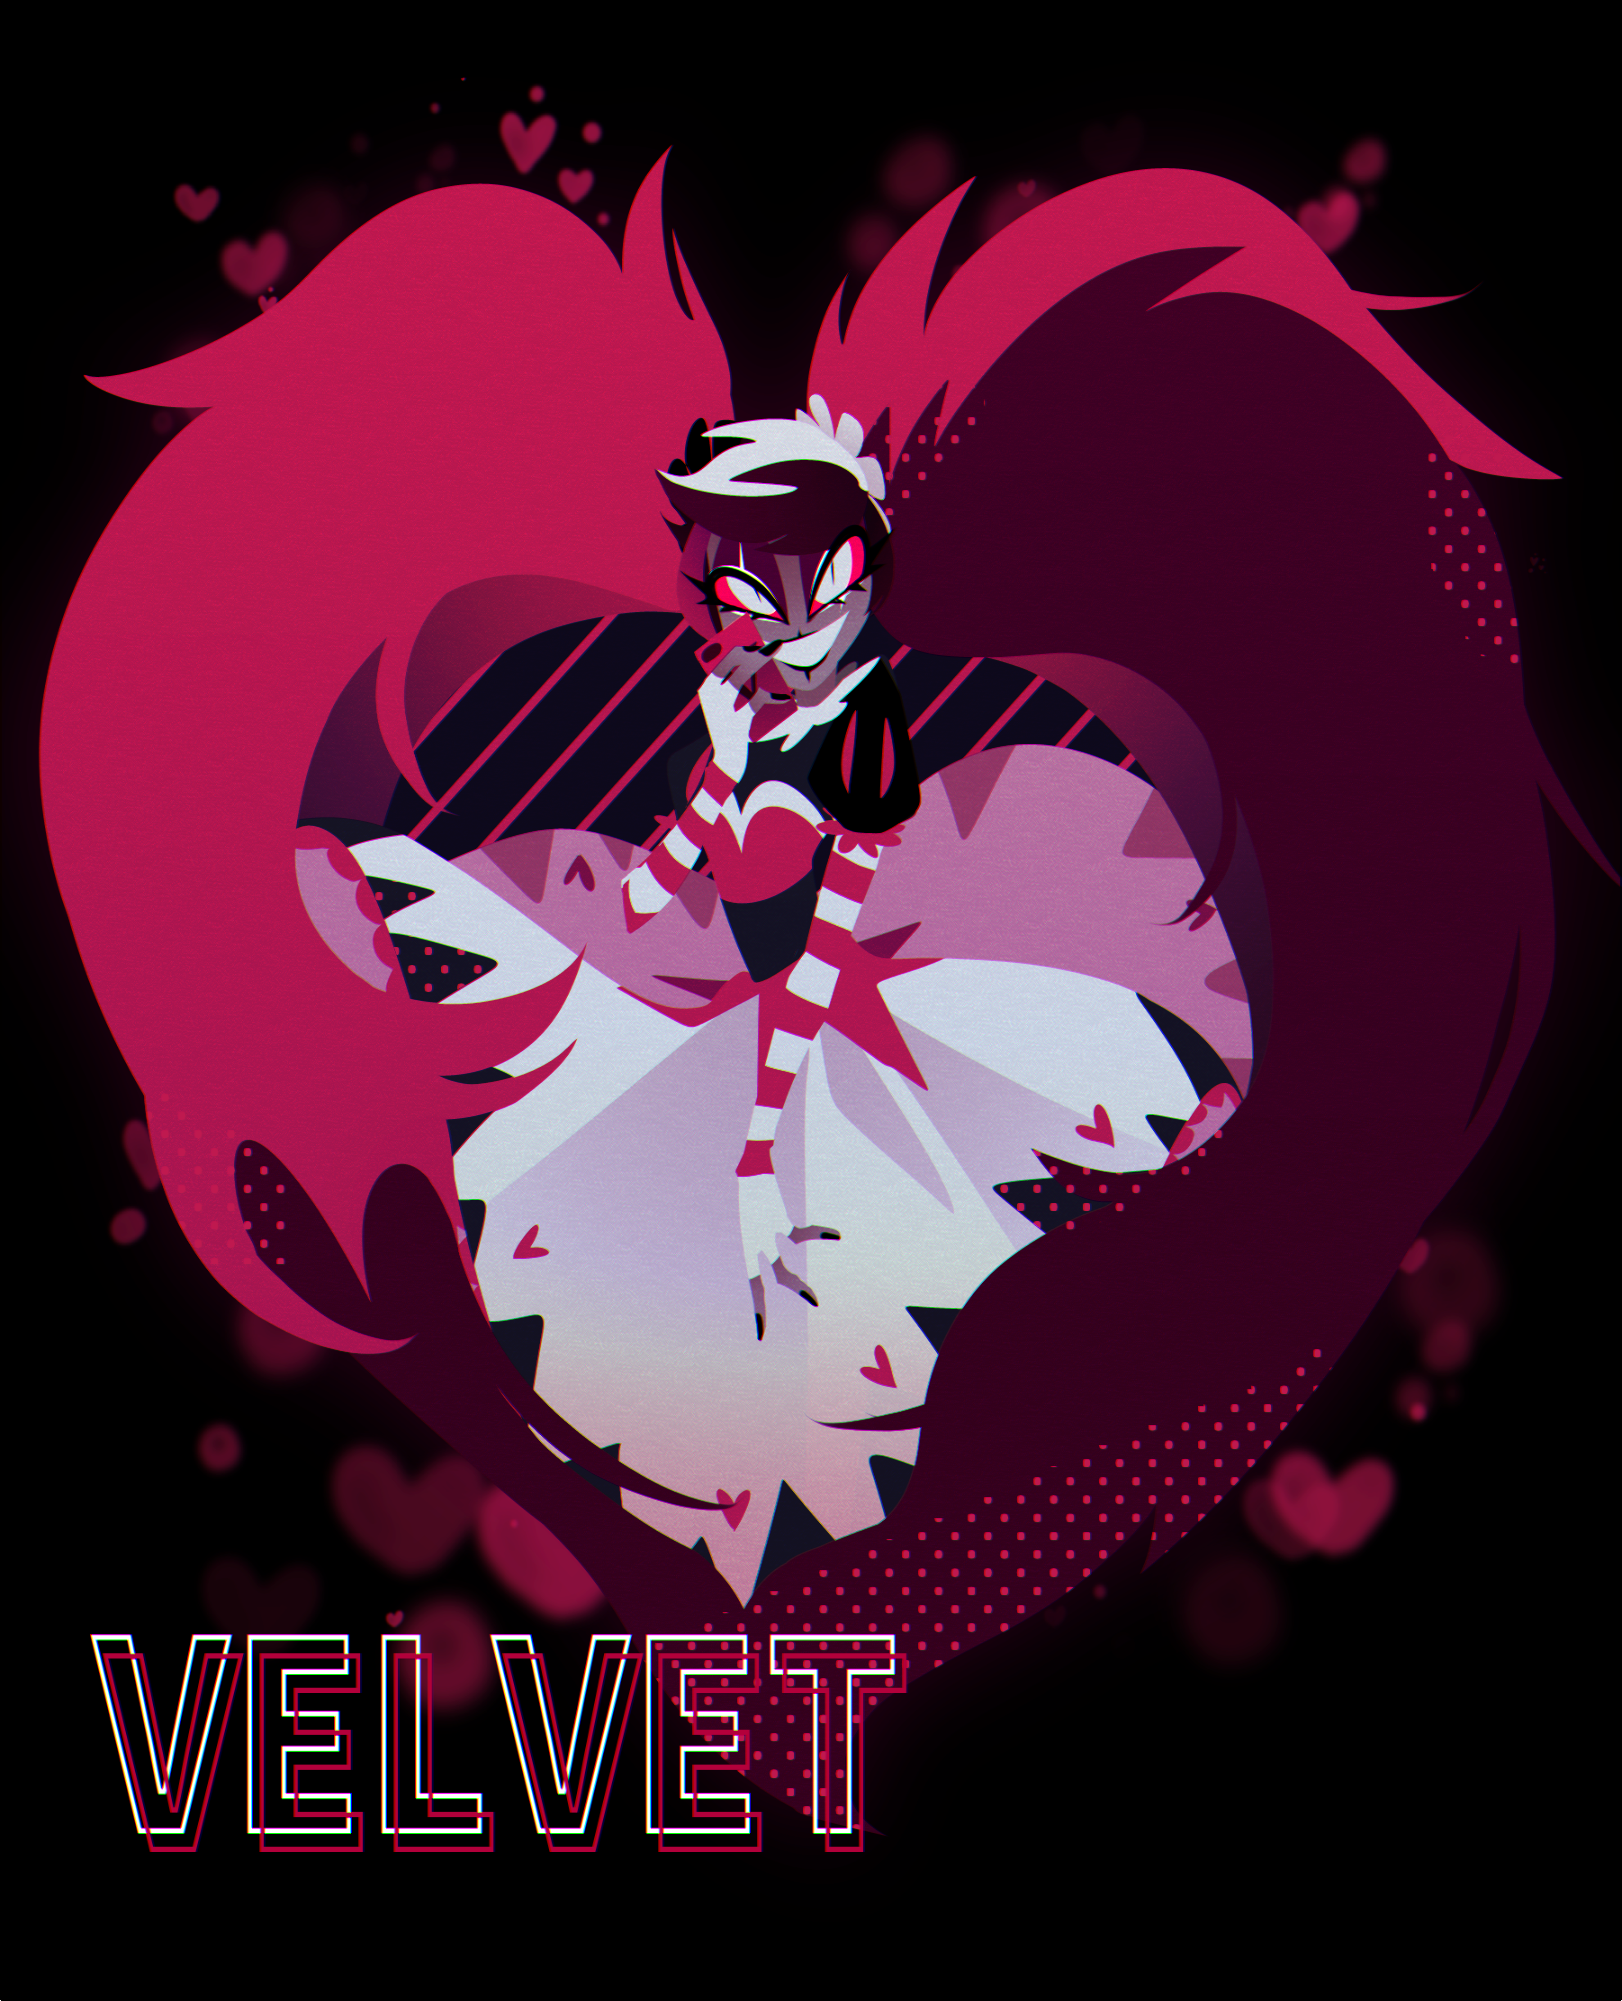 Velvet (Hazbin) Hotel Anime Image Board